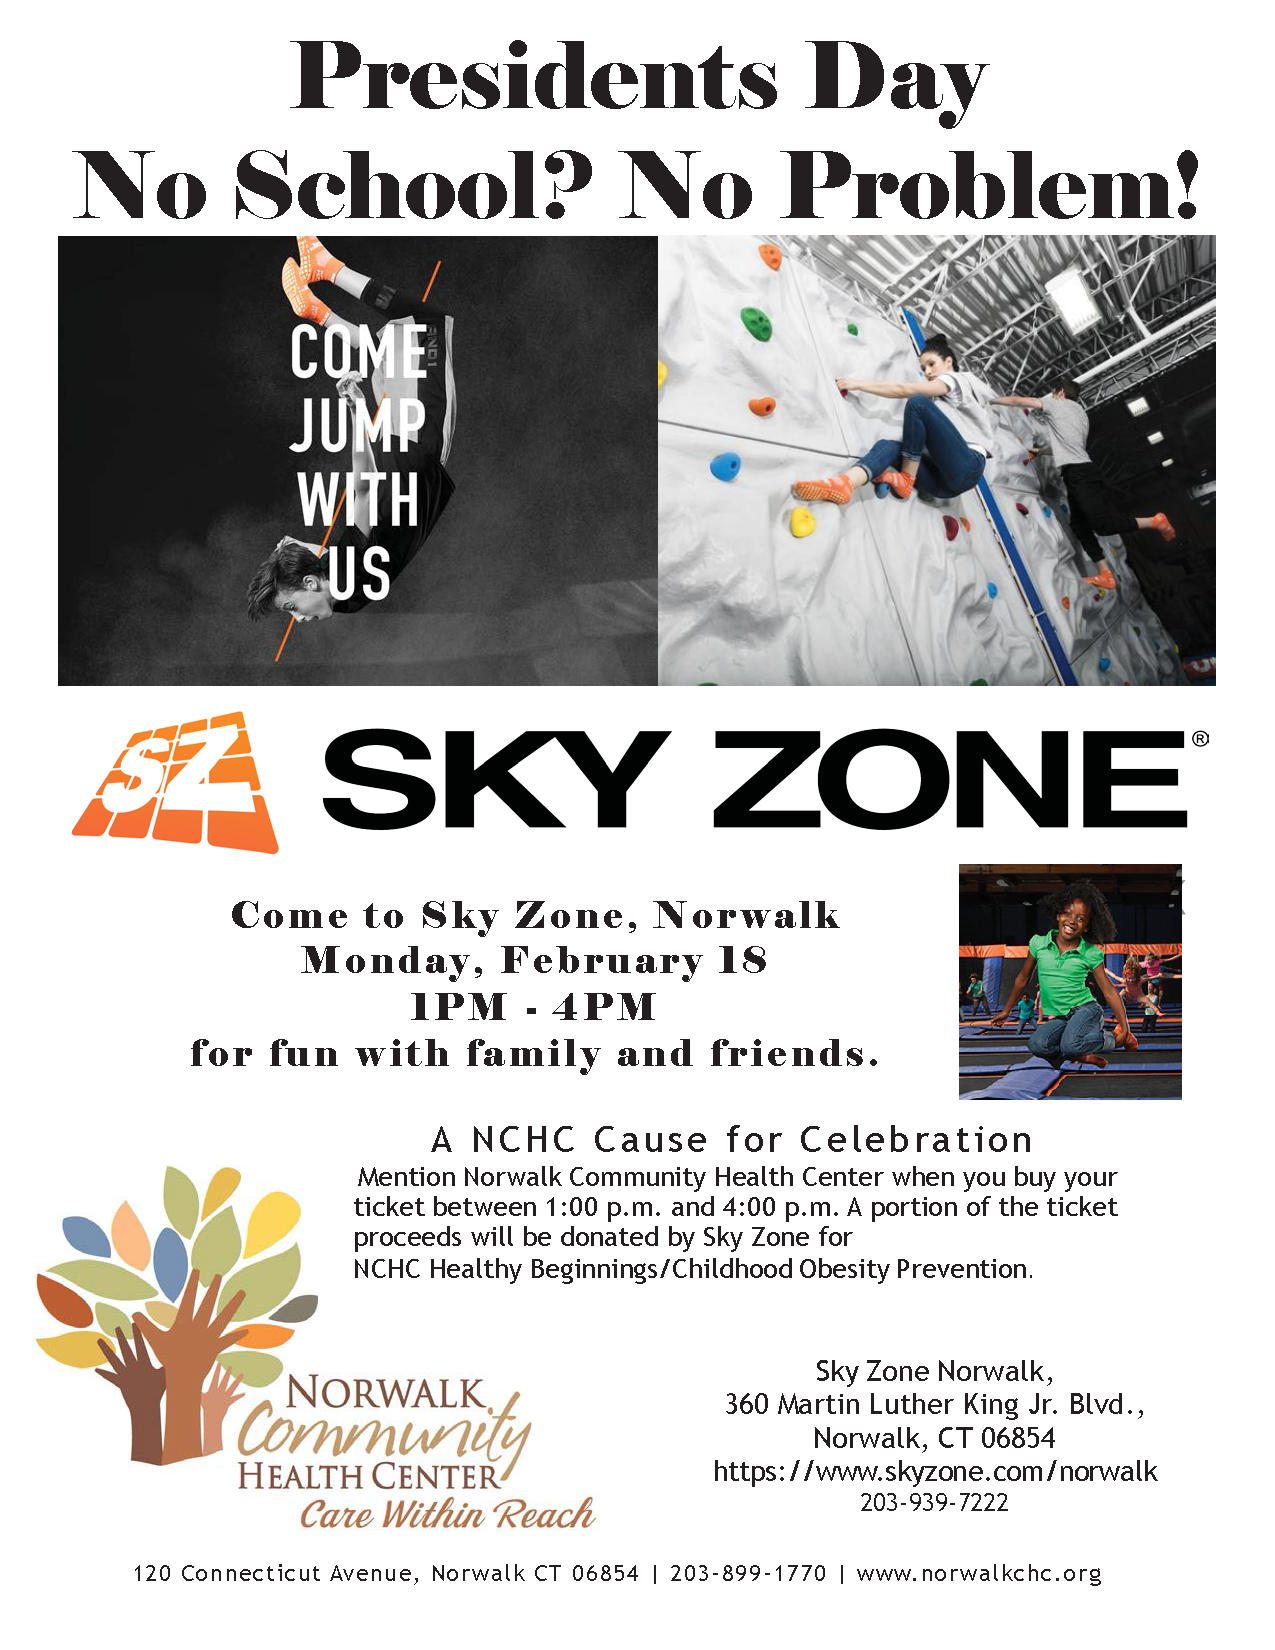 Sky Zone Norwalk Presidents Day Benefit For Norwalk Community Health Center Fairfield County S Community Foundation